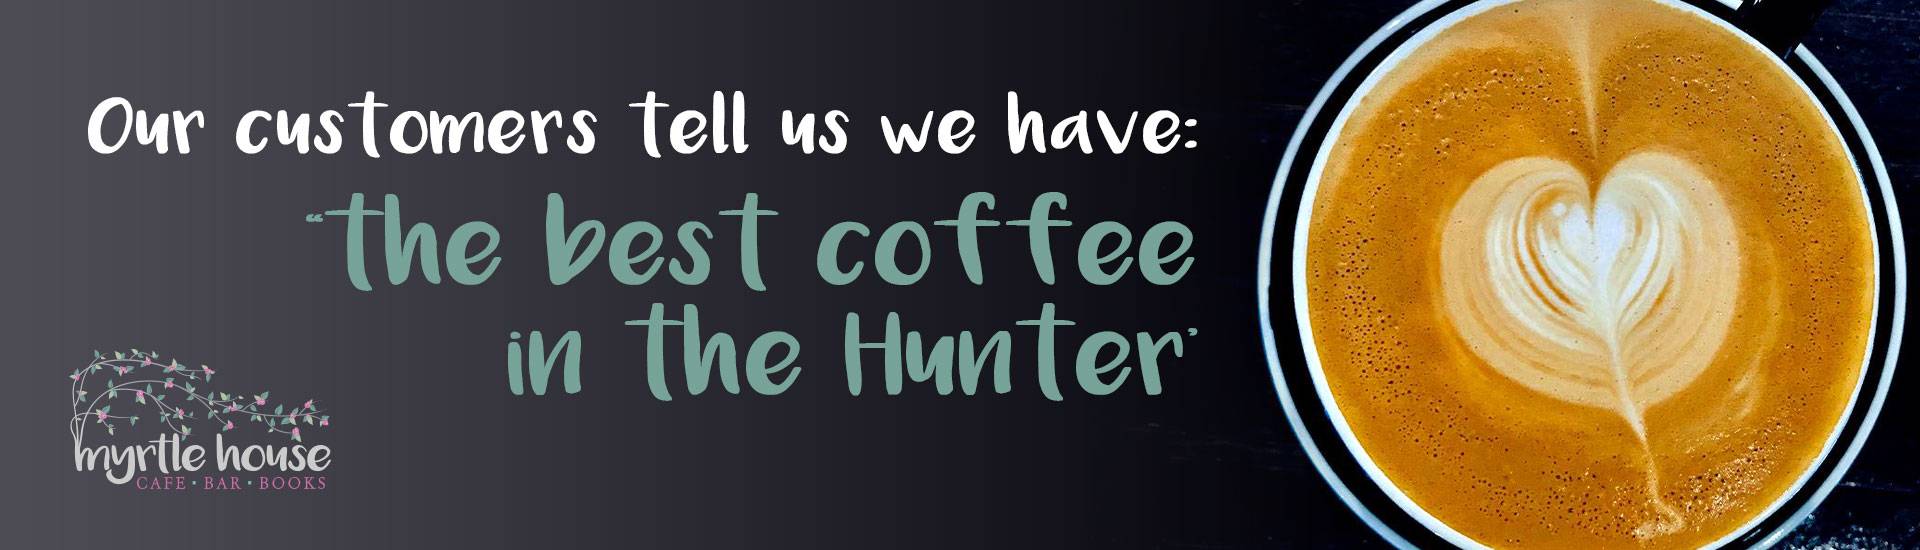 best coffee in the hunter